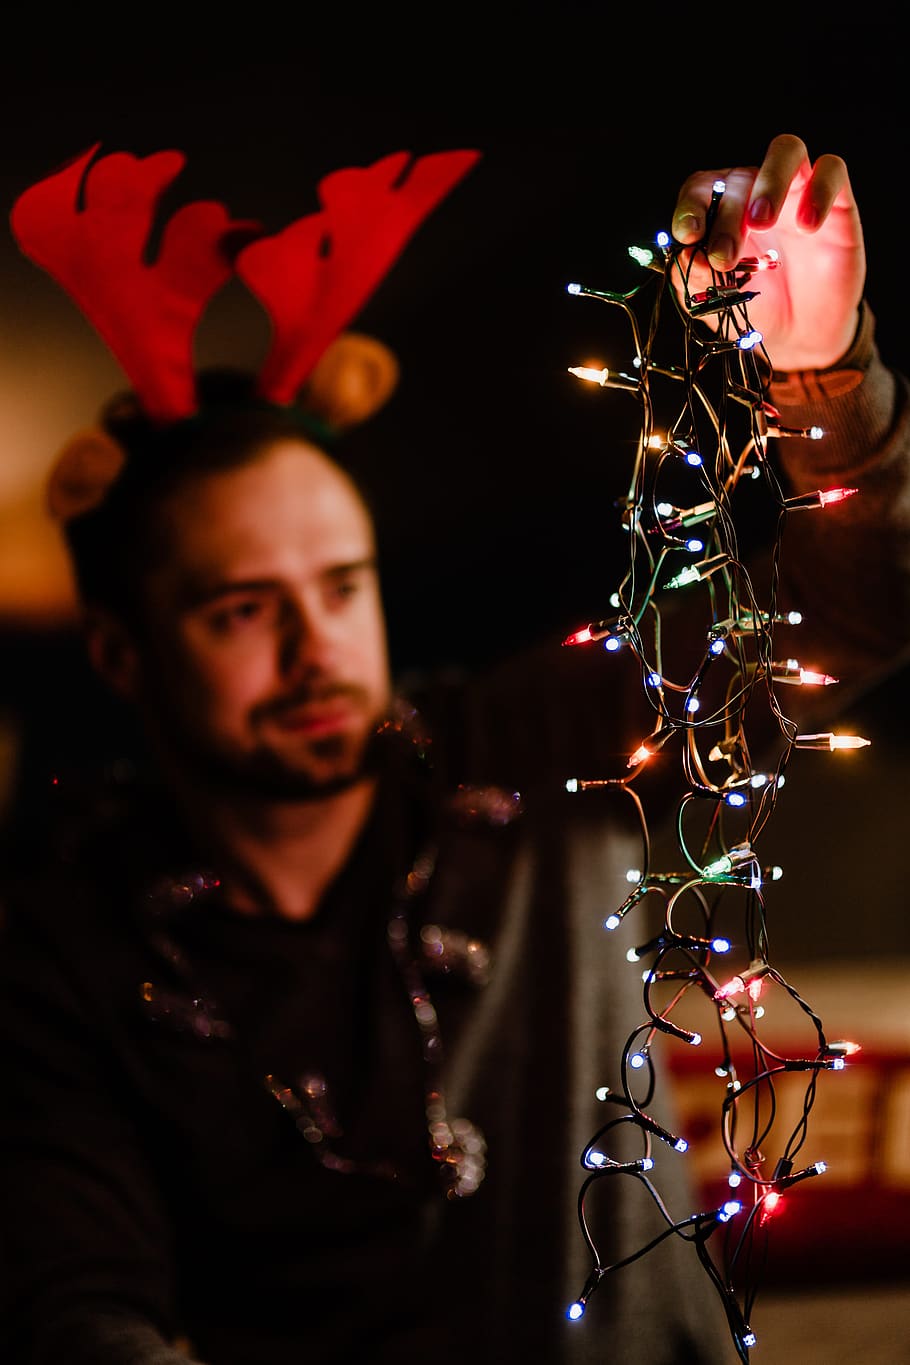 hombre, luces de navidad, guapo, navidad, diciembre, celebracion, luces, diversion, divertido, jovenes